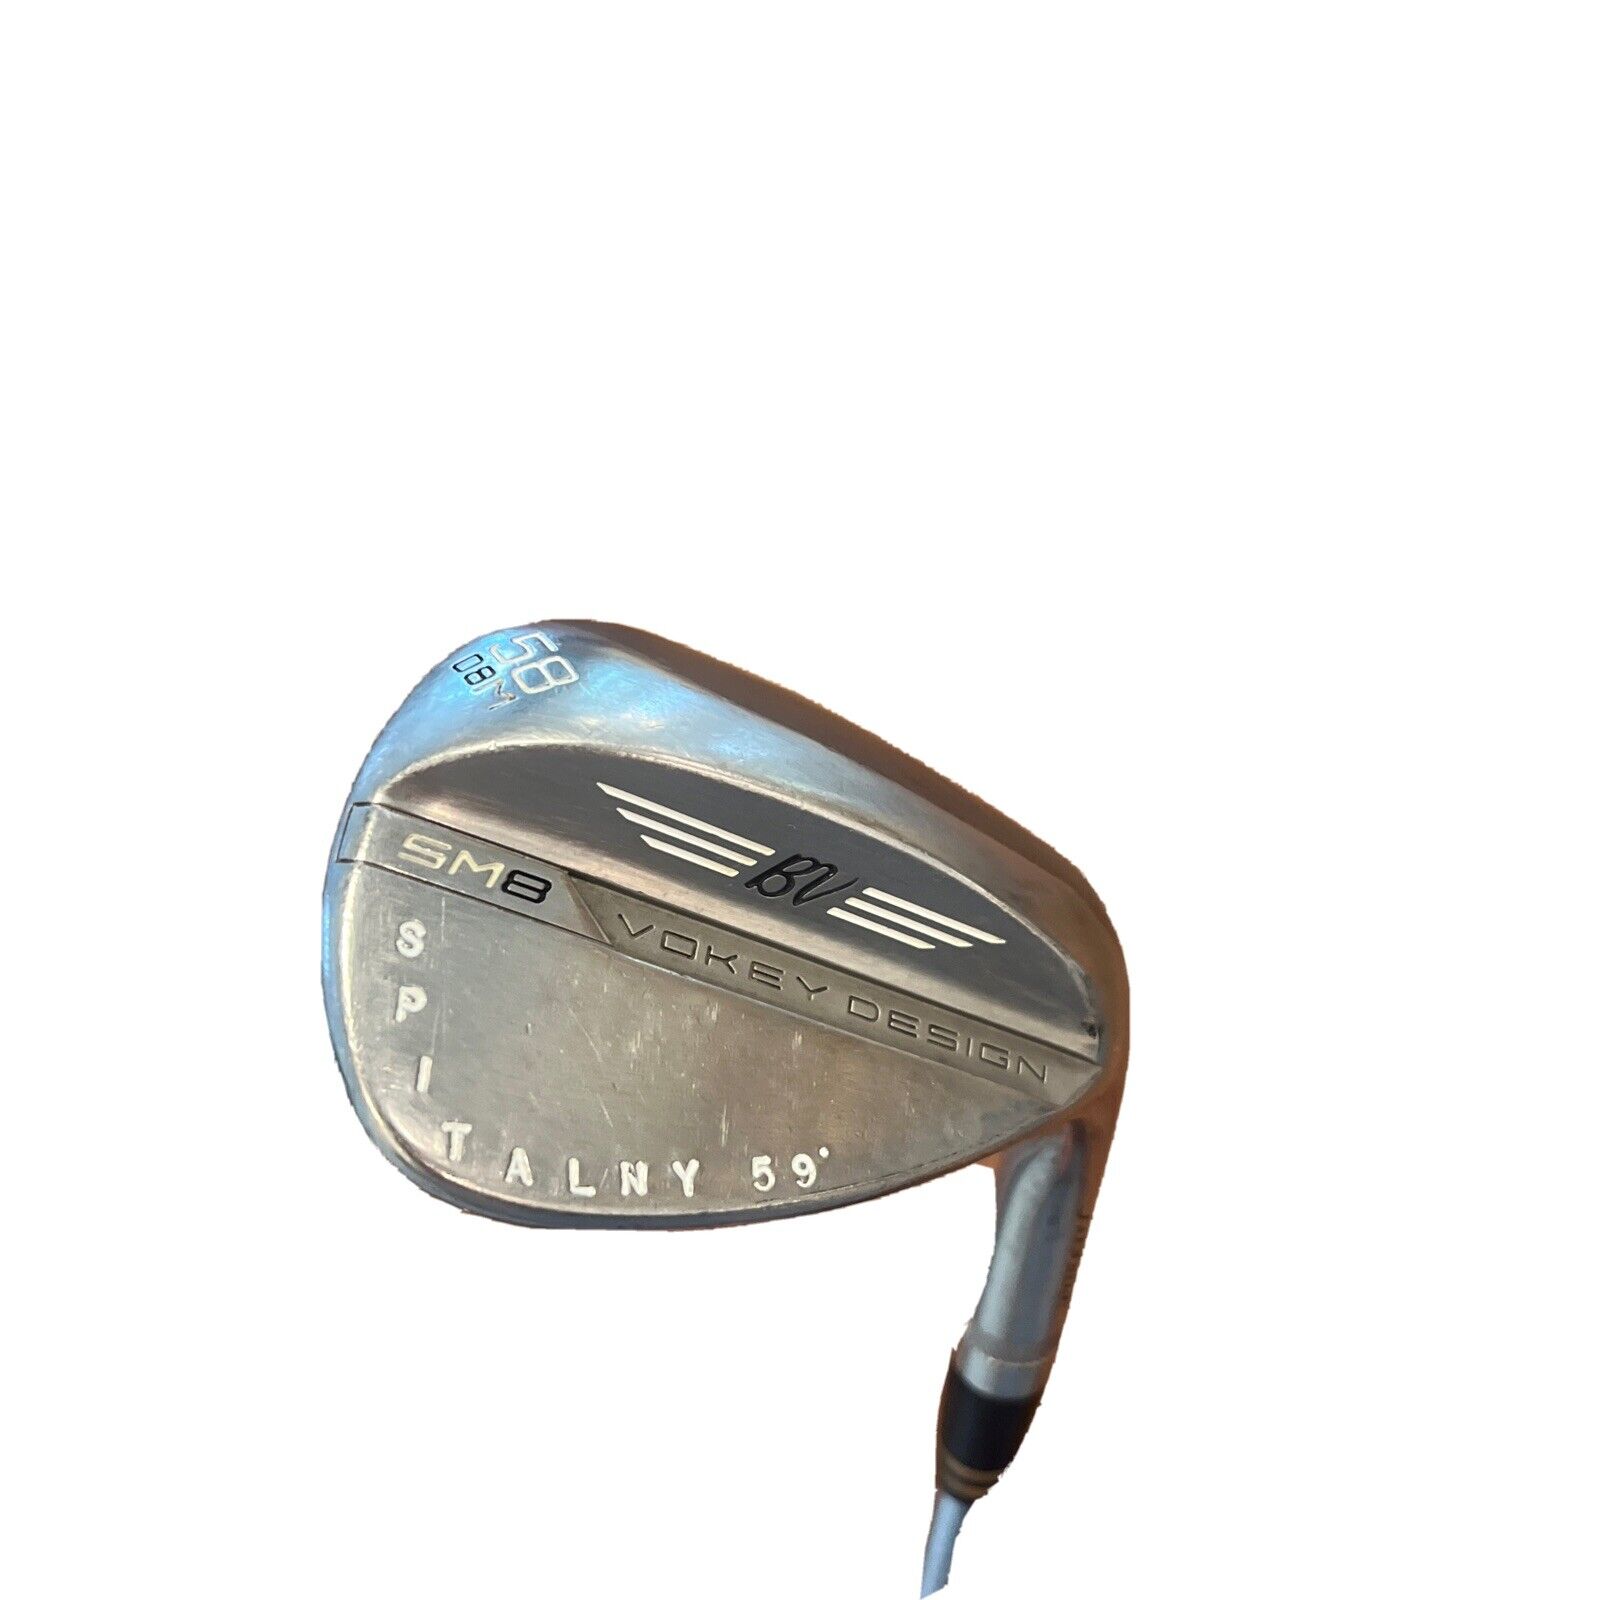 Vokey SM8 Golf Wedge for sale online eBay